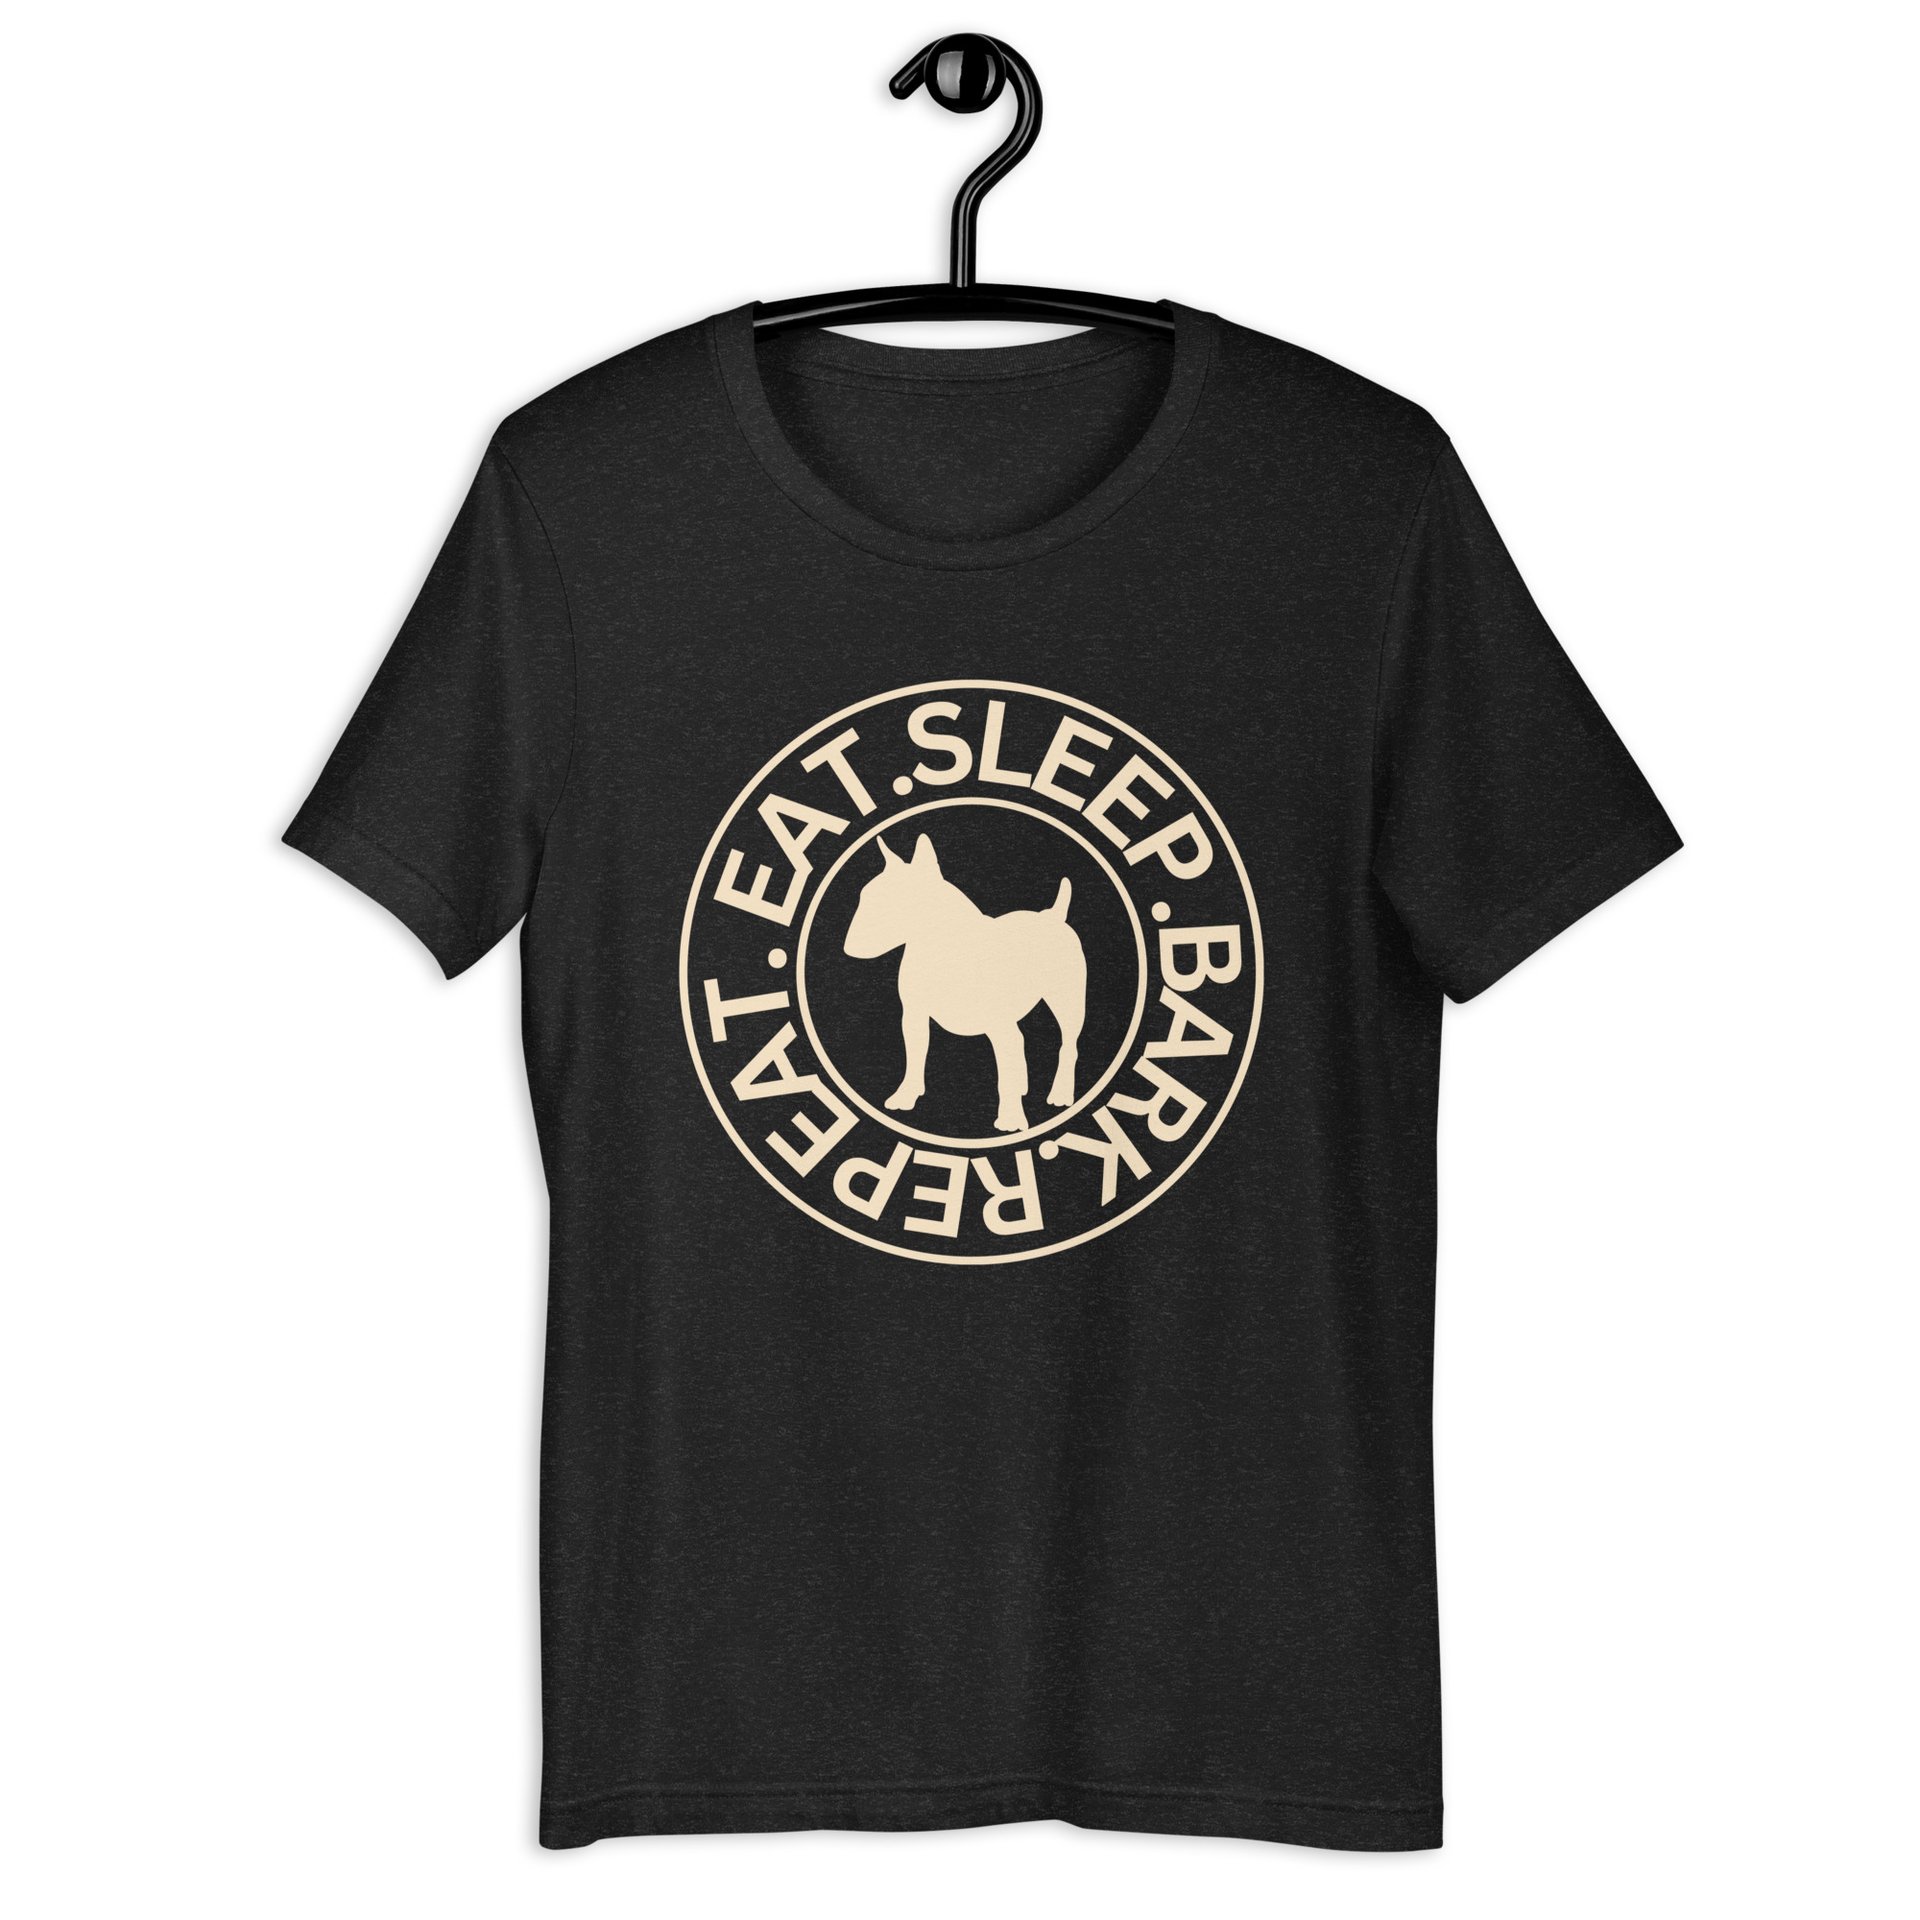 Eat Sleep Bark Repeat Bull Terrier Unisex T-Shirt. Black Heather